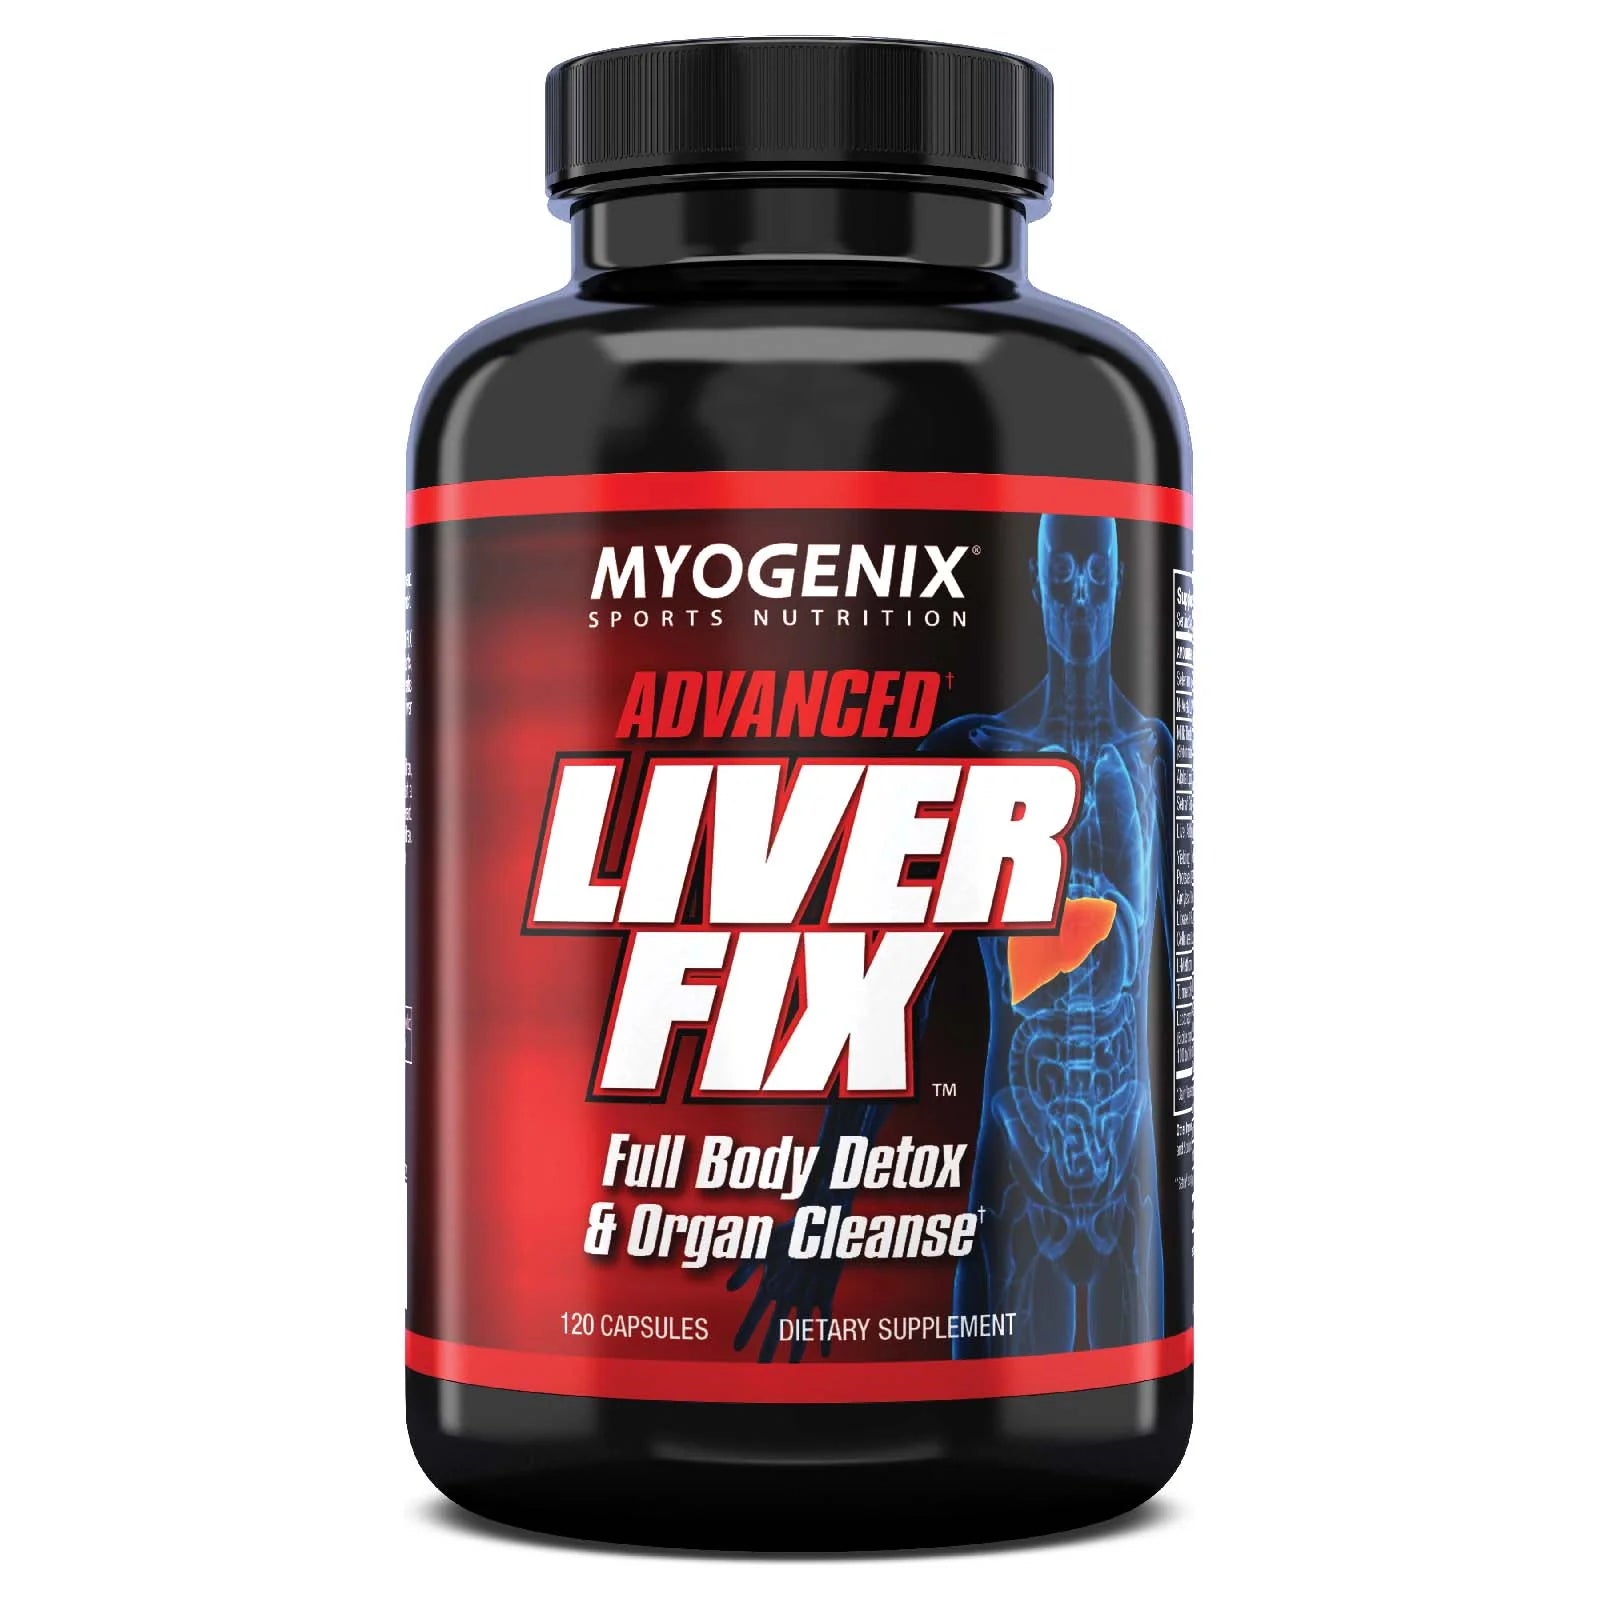 Liver Fix Full Body Detox